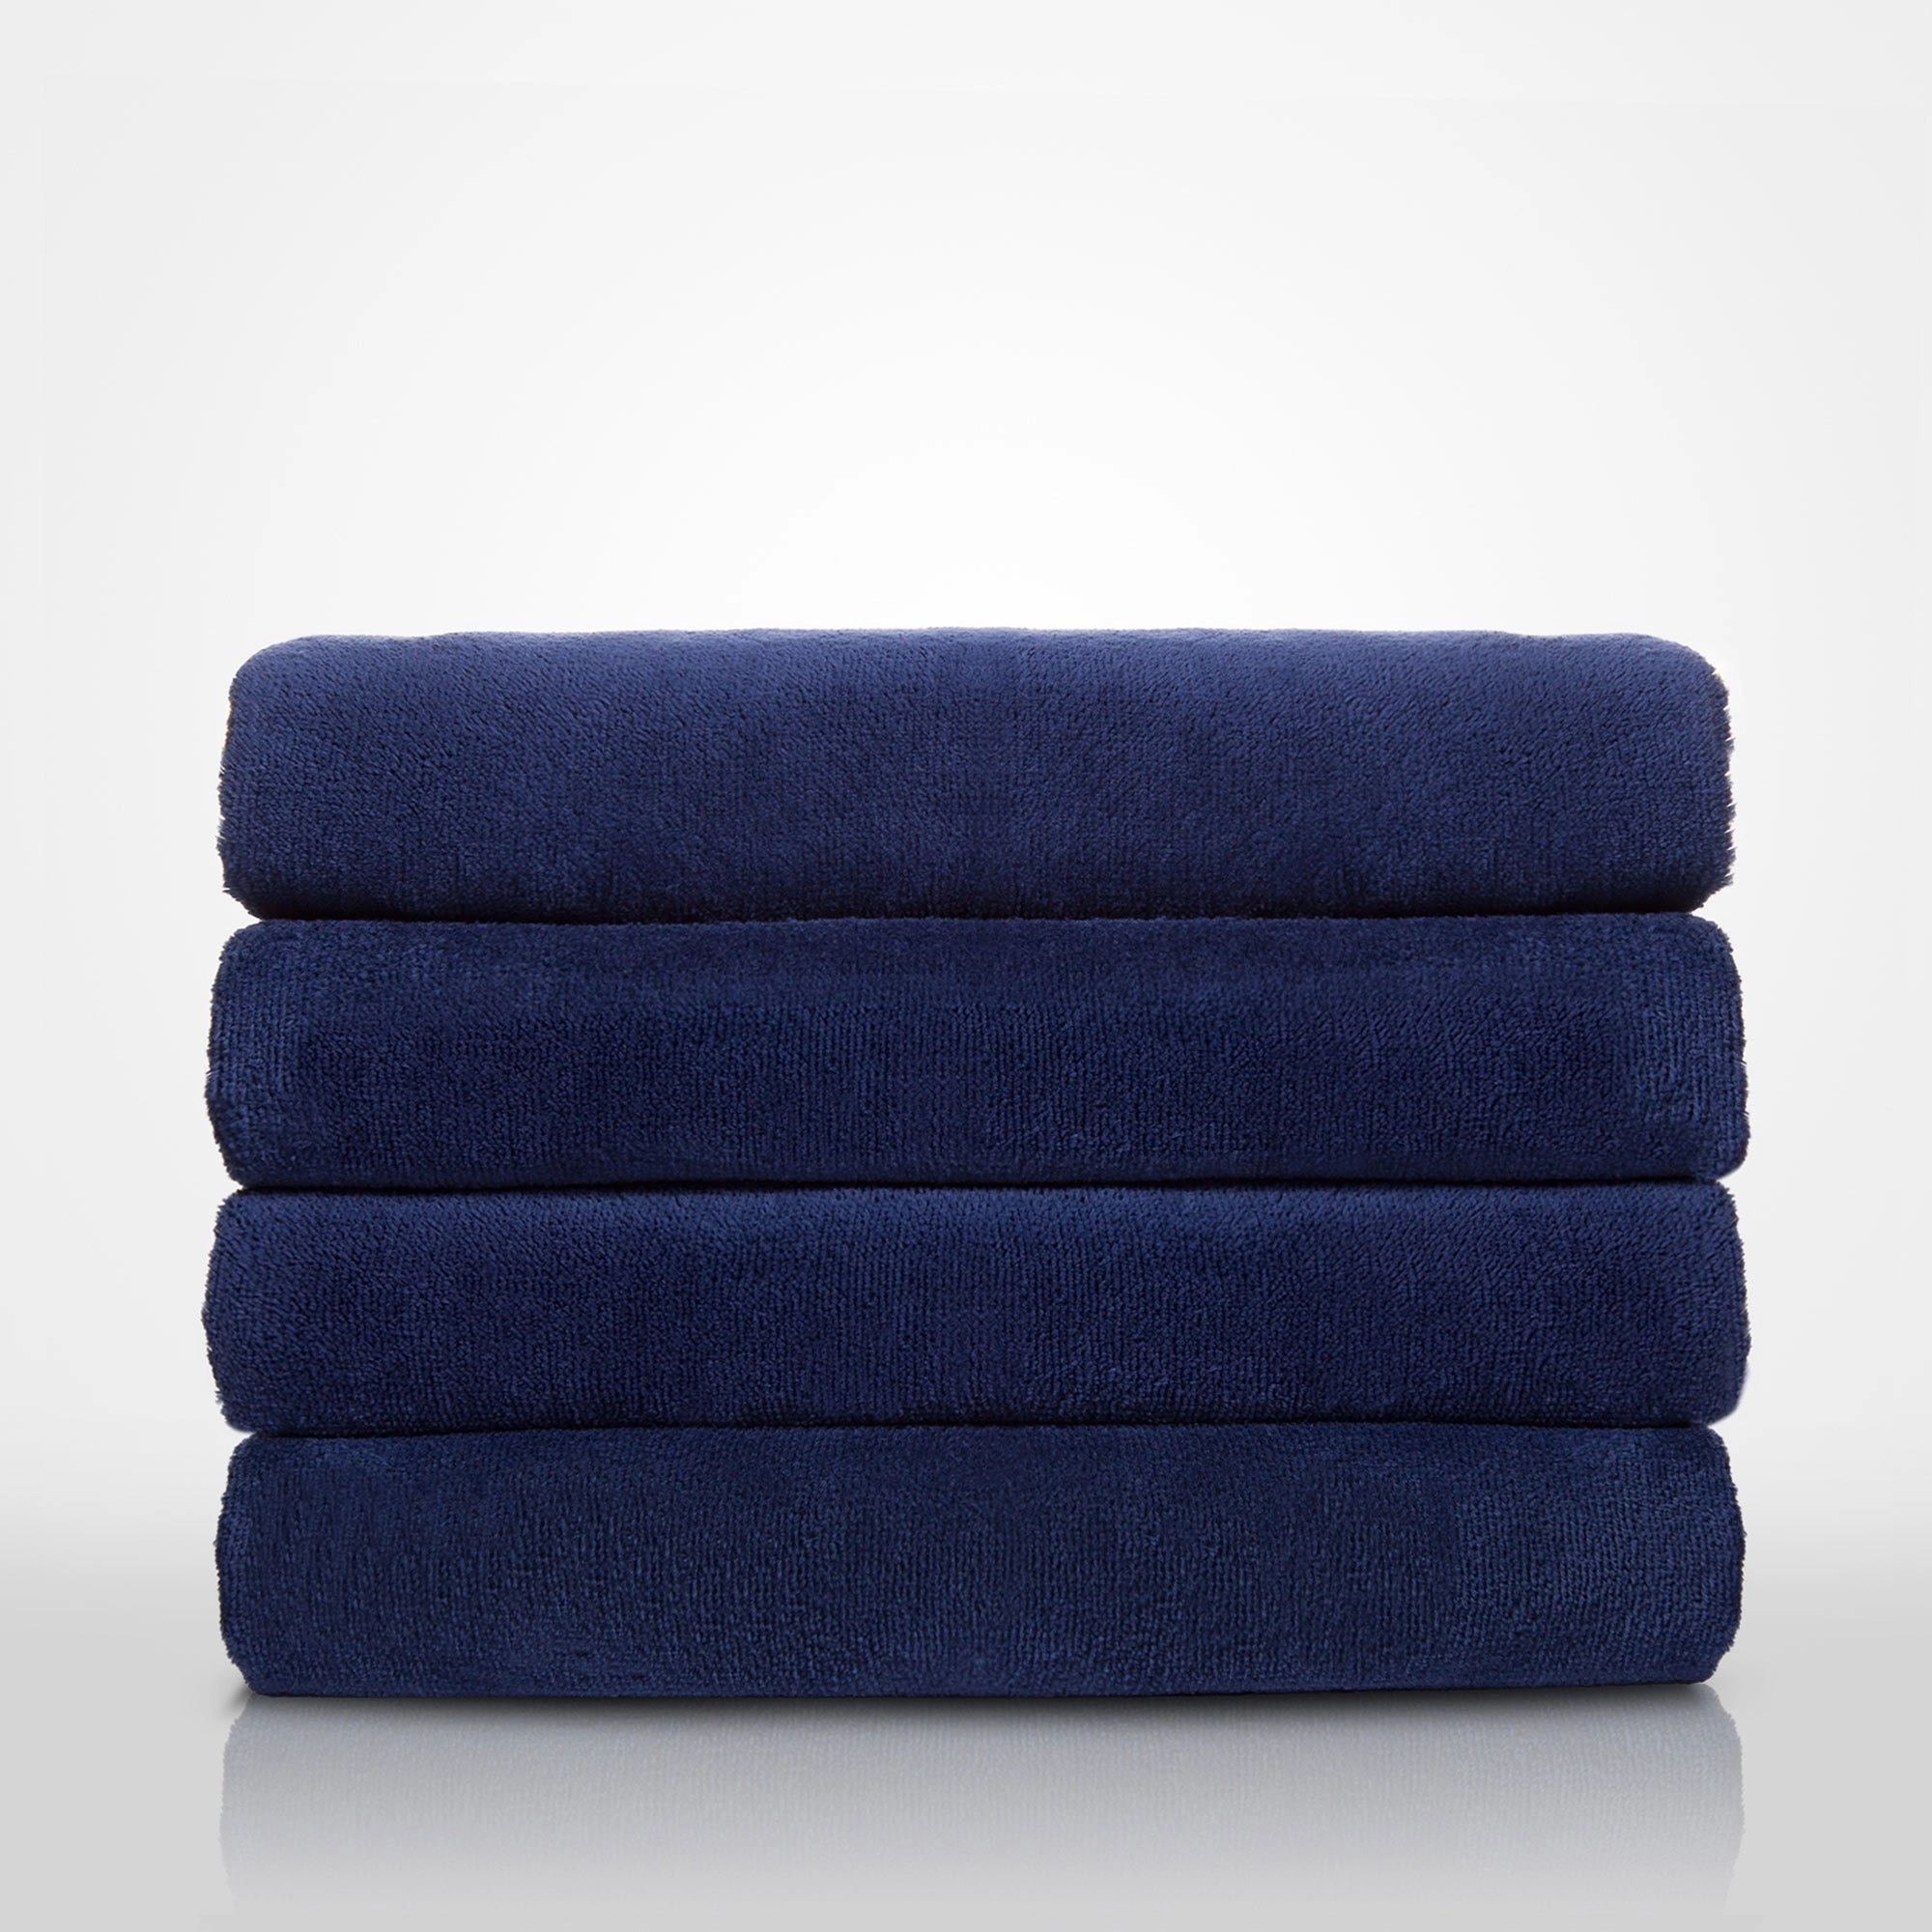 35" x 60" - 100% Turkish Cotton Terry Velour Navy Blue Pool / Beach Towel-Robemart.com